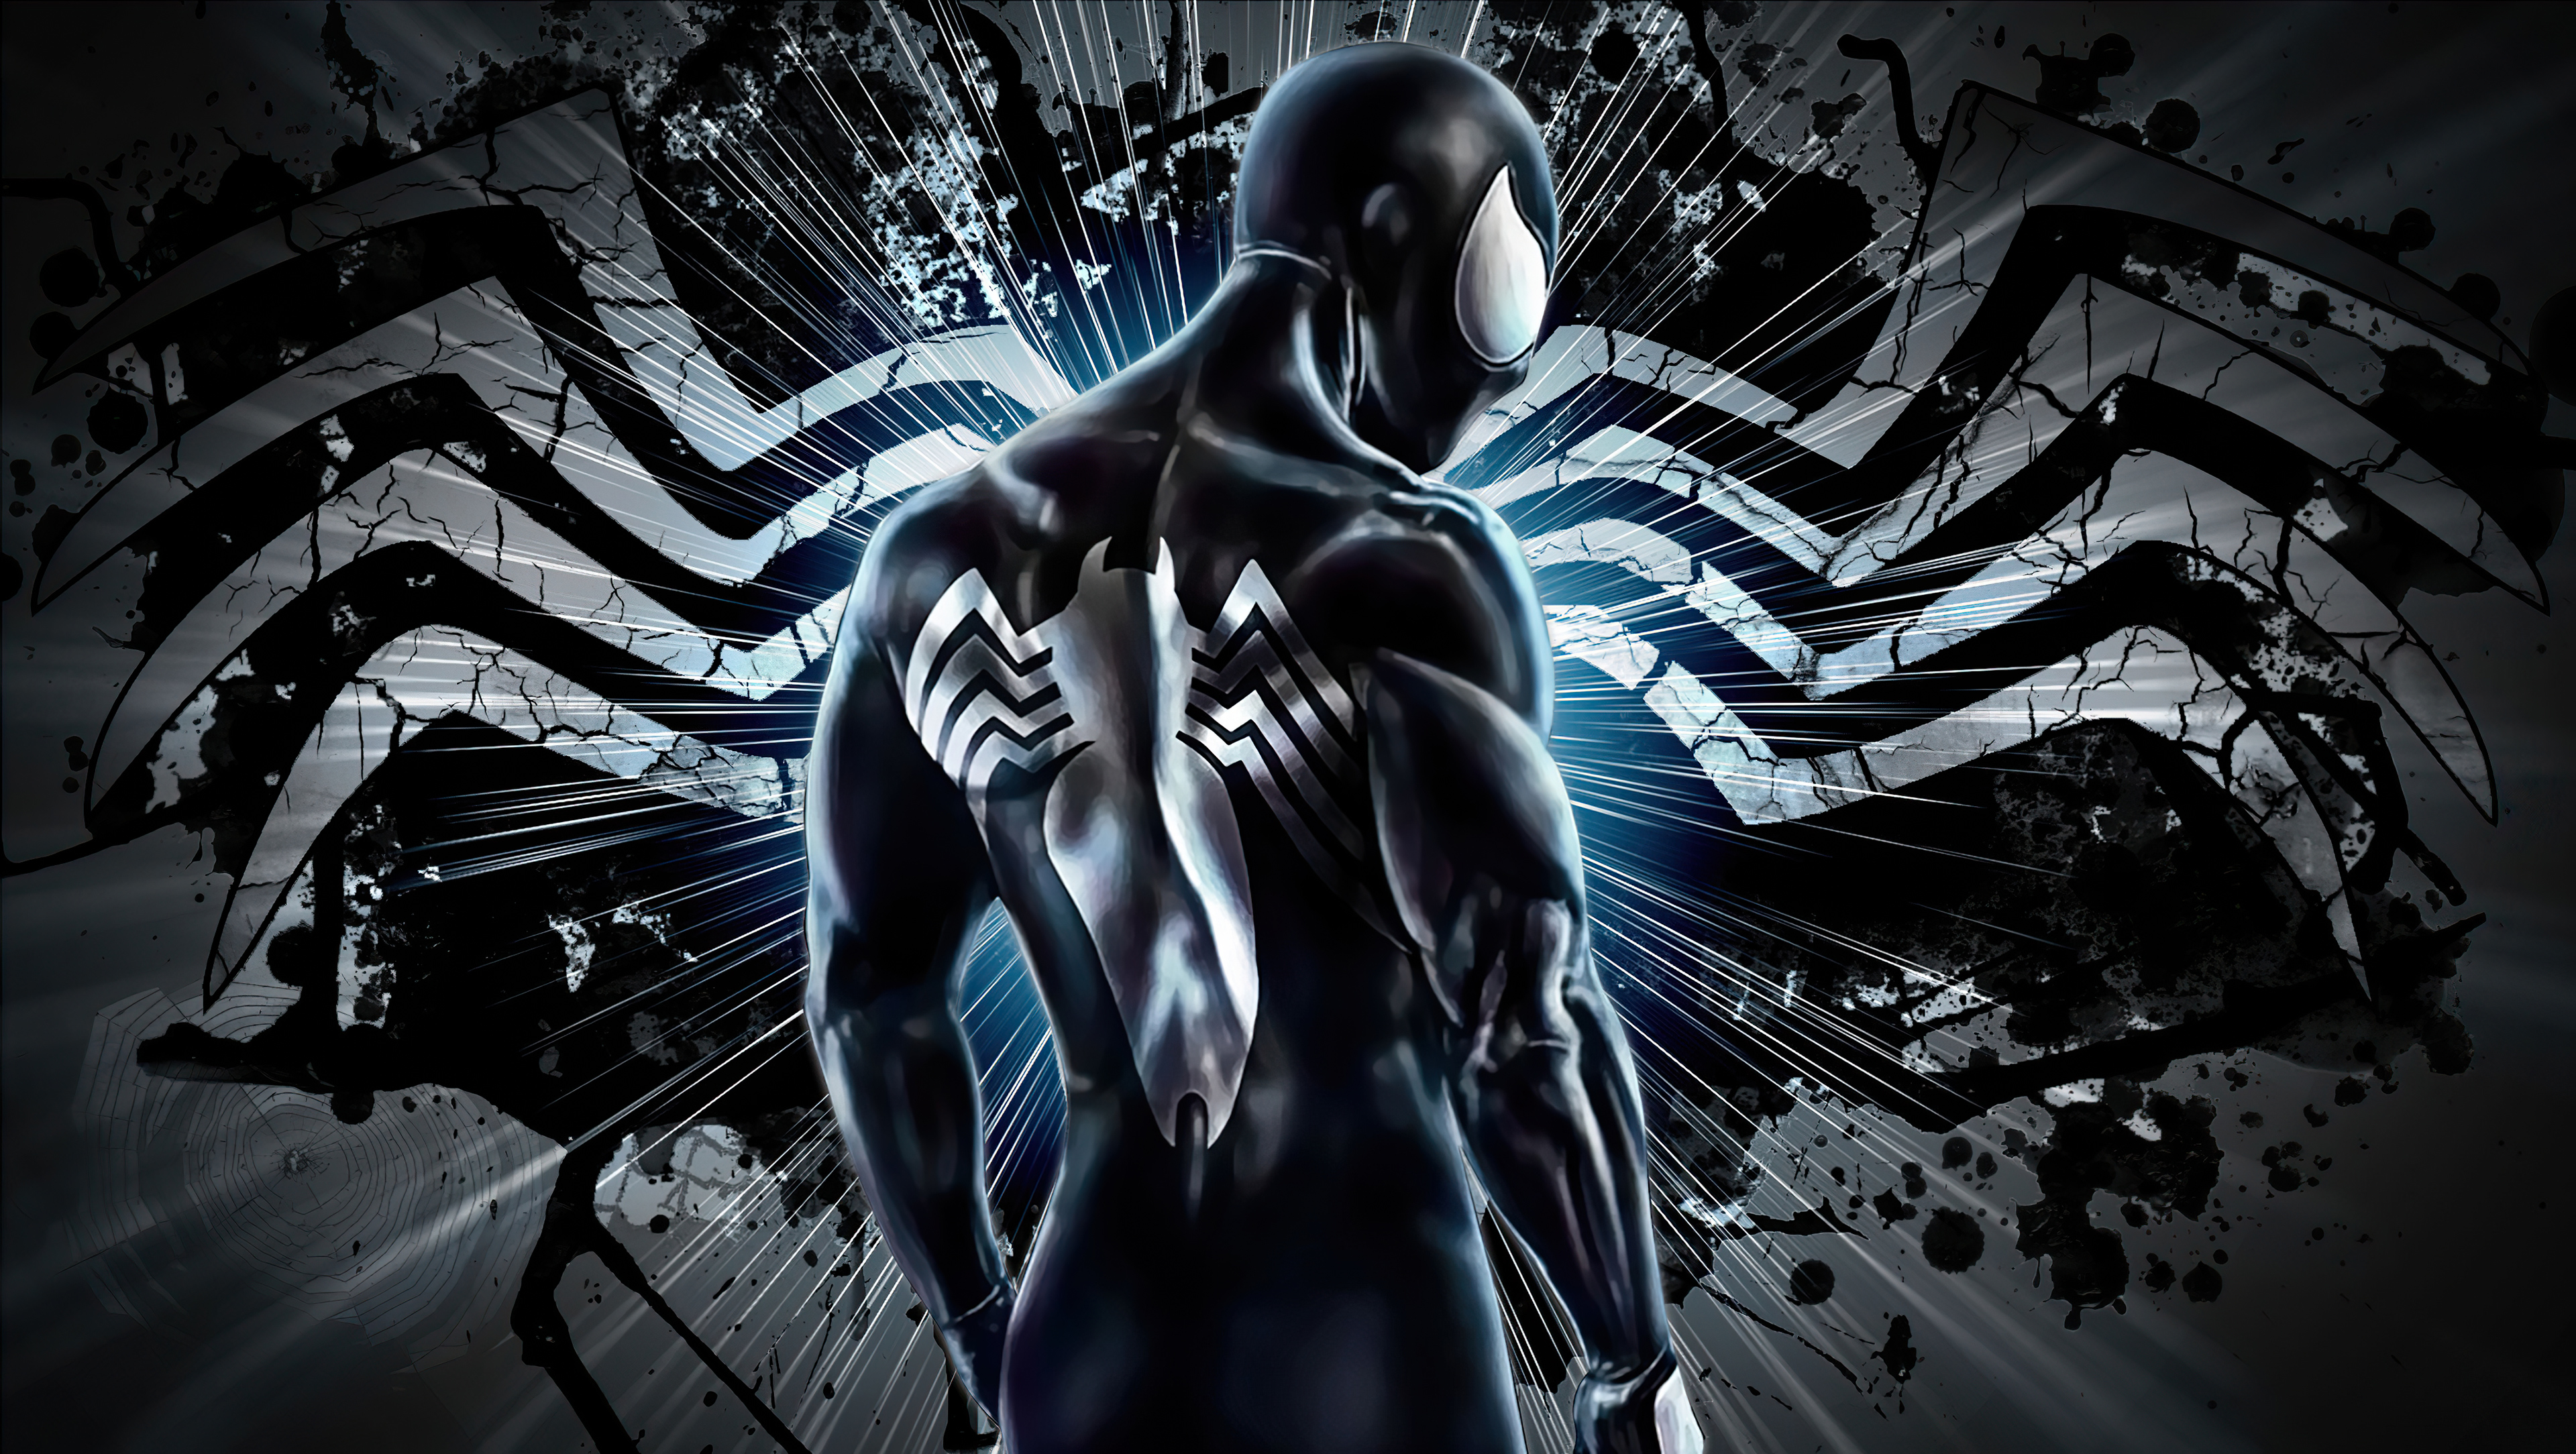 تويتر  Axiolite  Digital Art Network على تويتر iPhone 11 Wallpaper  Black spiderman 4K HD Download Free 1  HD Wallpaper amp Screensavers   httpstco0OJkzs7y9h  Download Free HD Wallpapers  httpstcoGzDGFlnZx4 